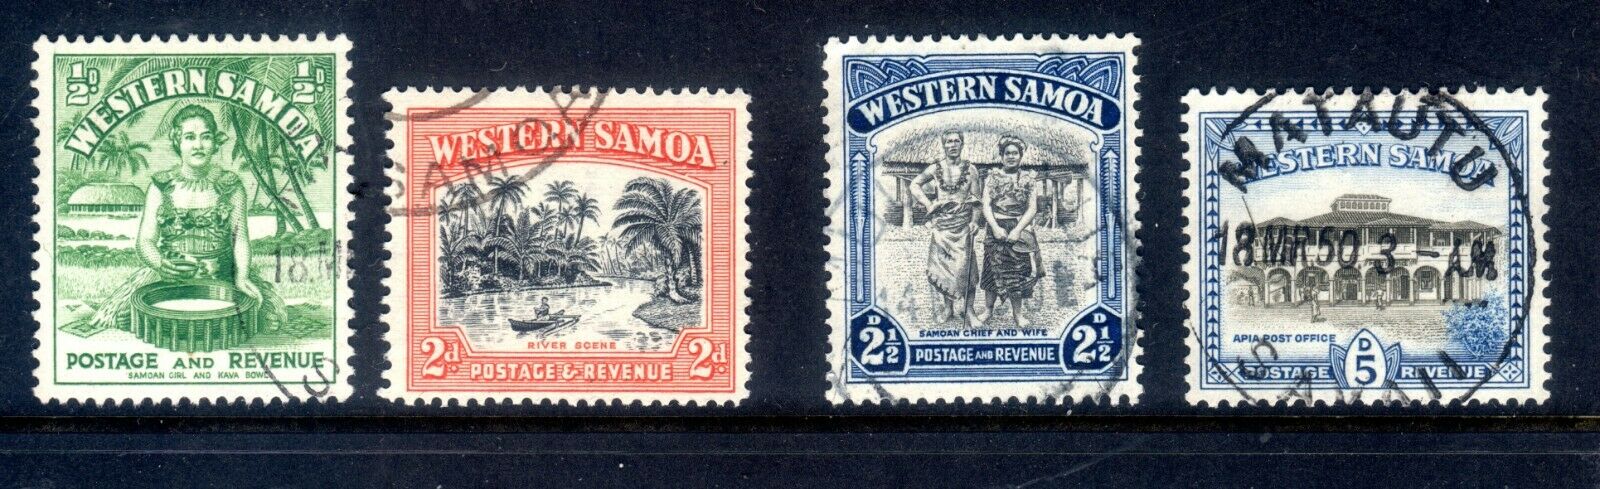 1944-9 Samoa Apia Post Office Set Used